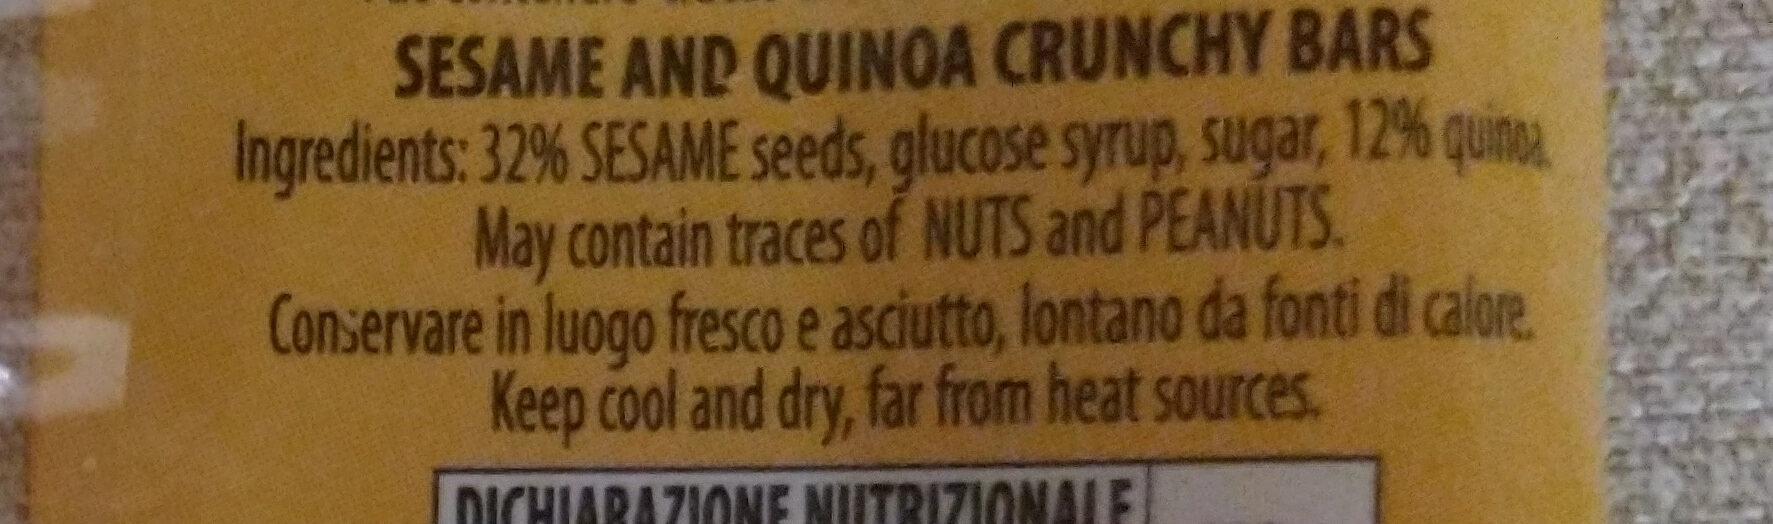 Snack sesamo e quinoa - Ingredients